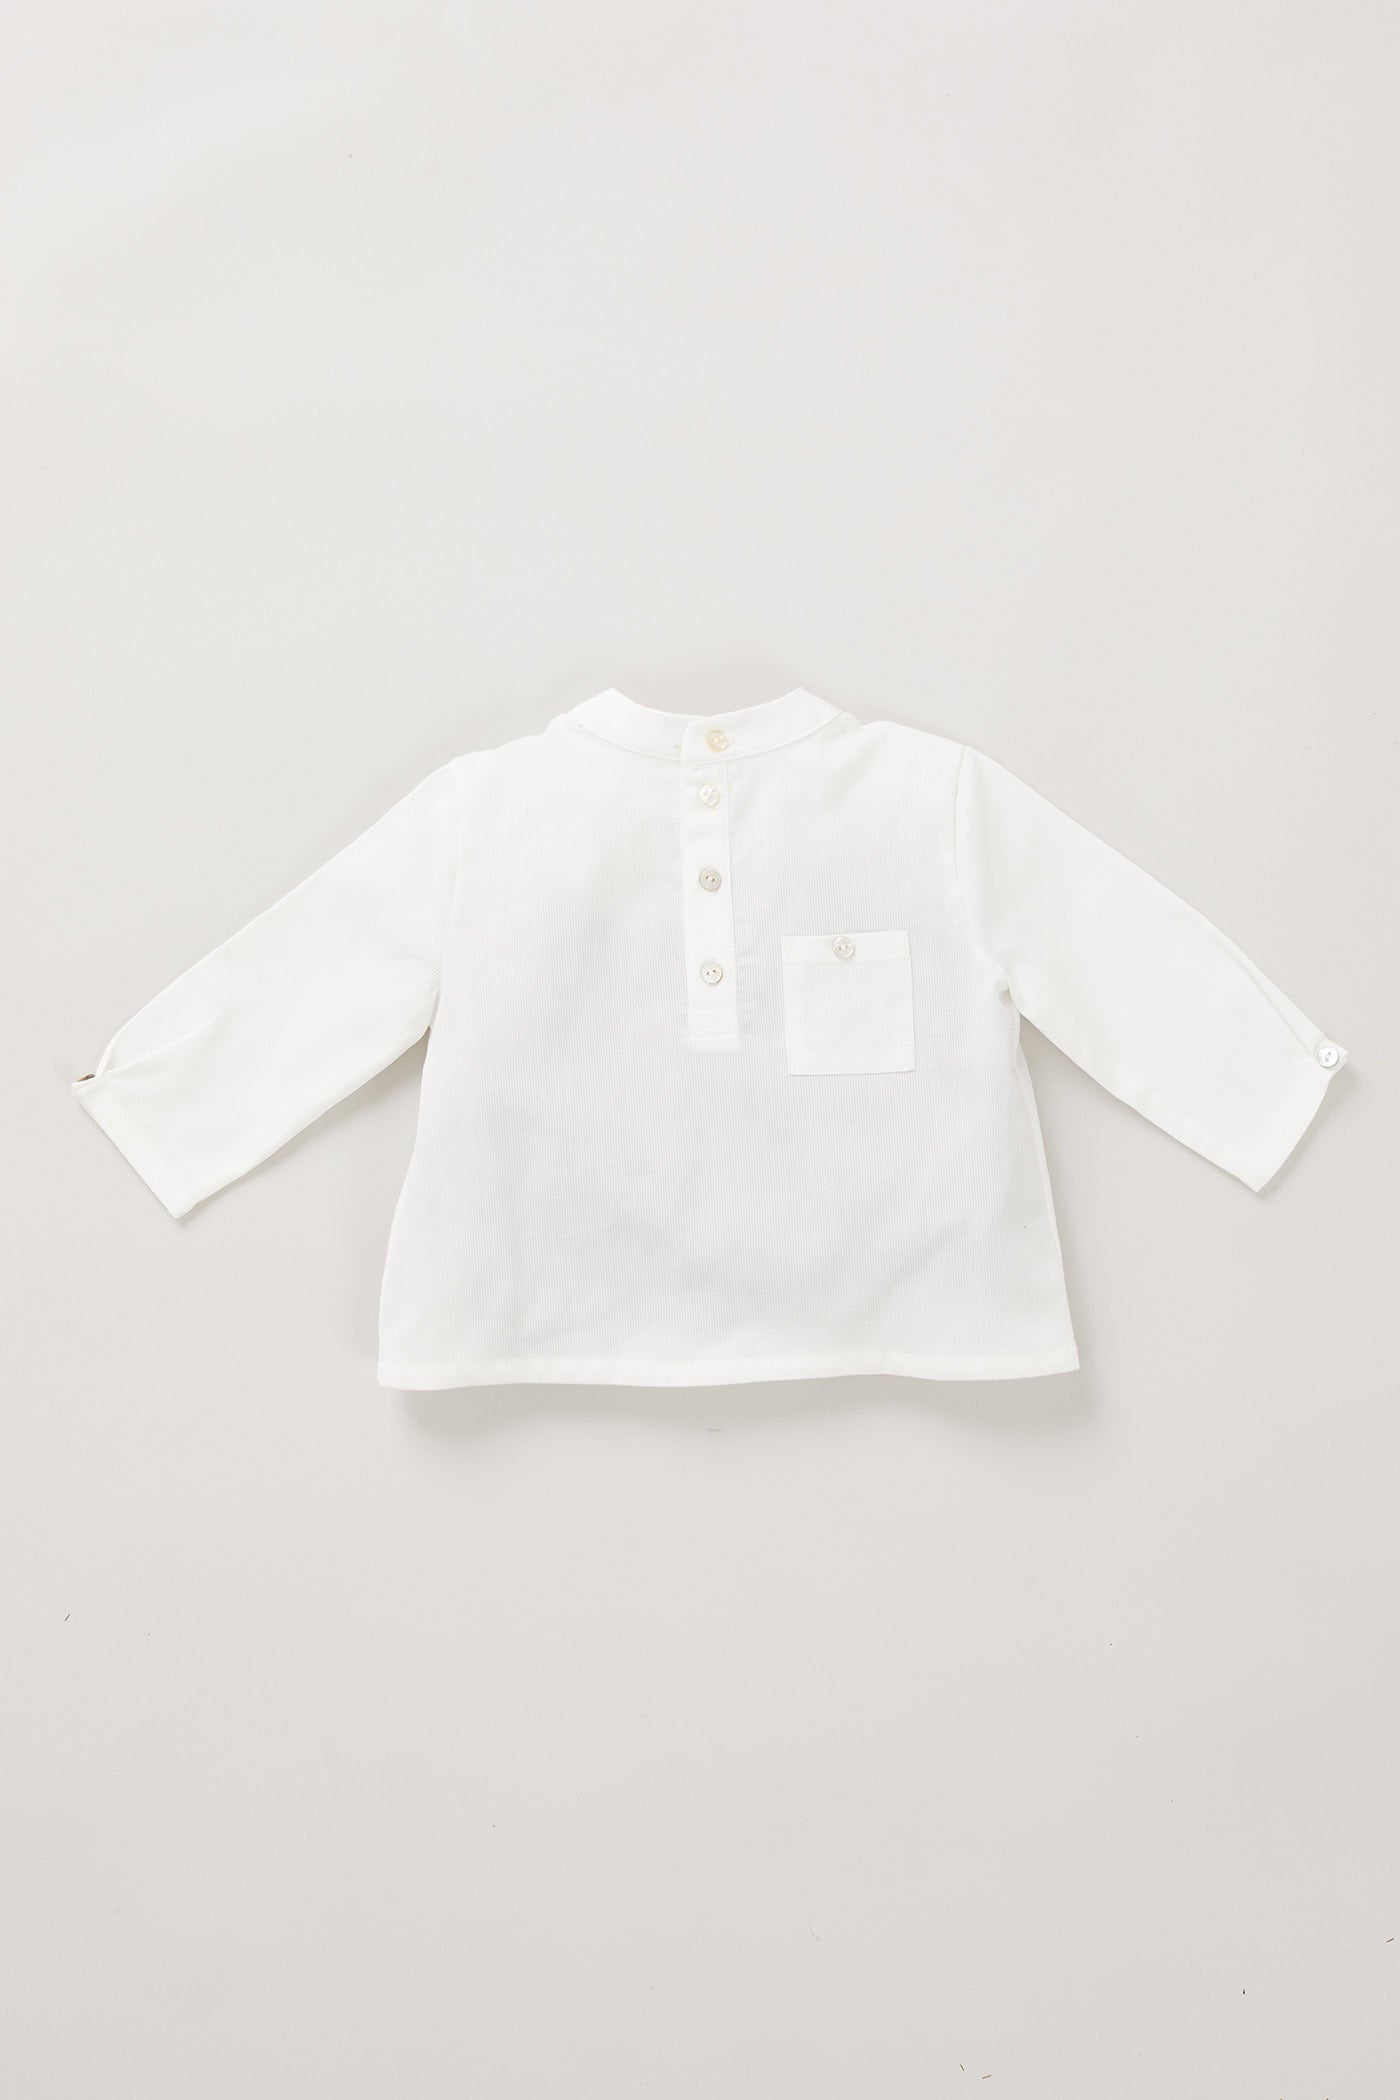 Apple Shirt White